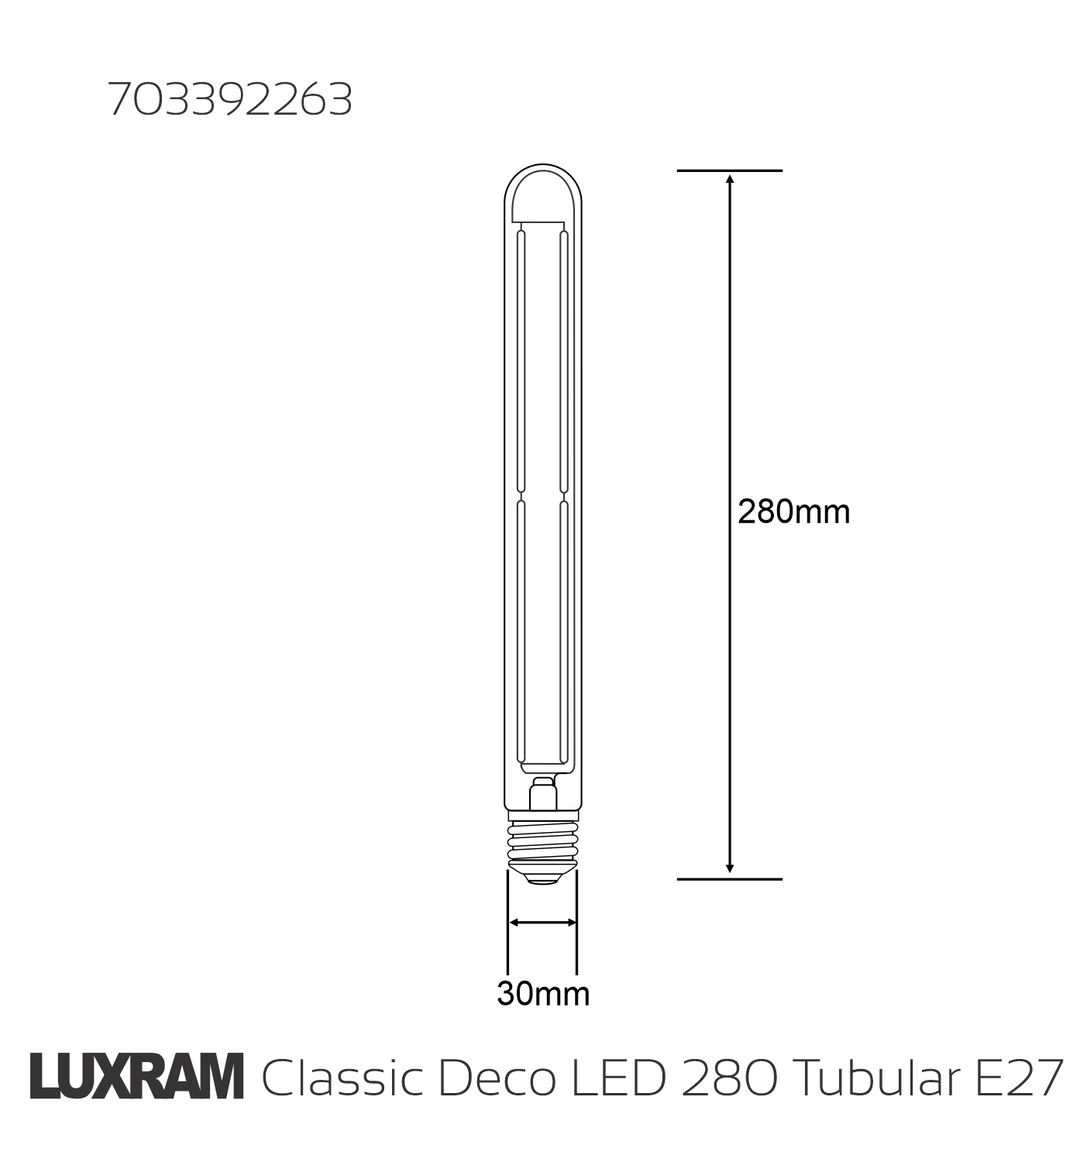 703392263 | Luxram Classic Deco LED Tubular Line | E27 Dimmable | 6W 2700K